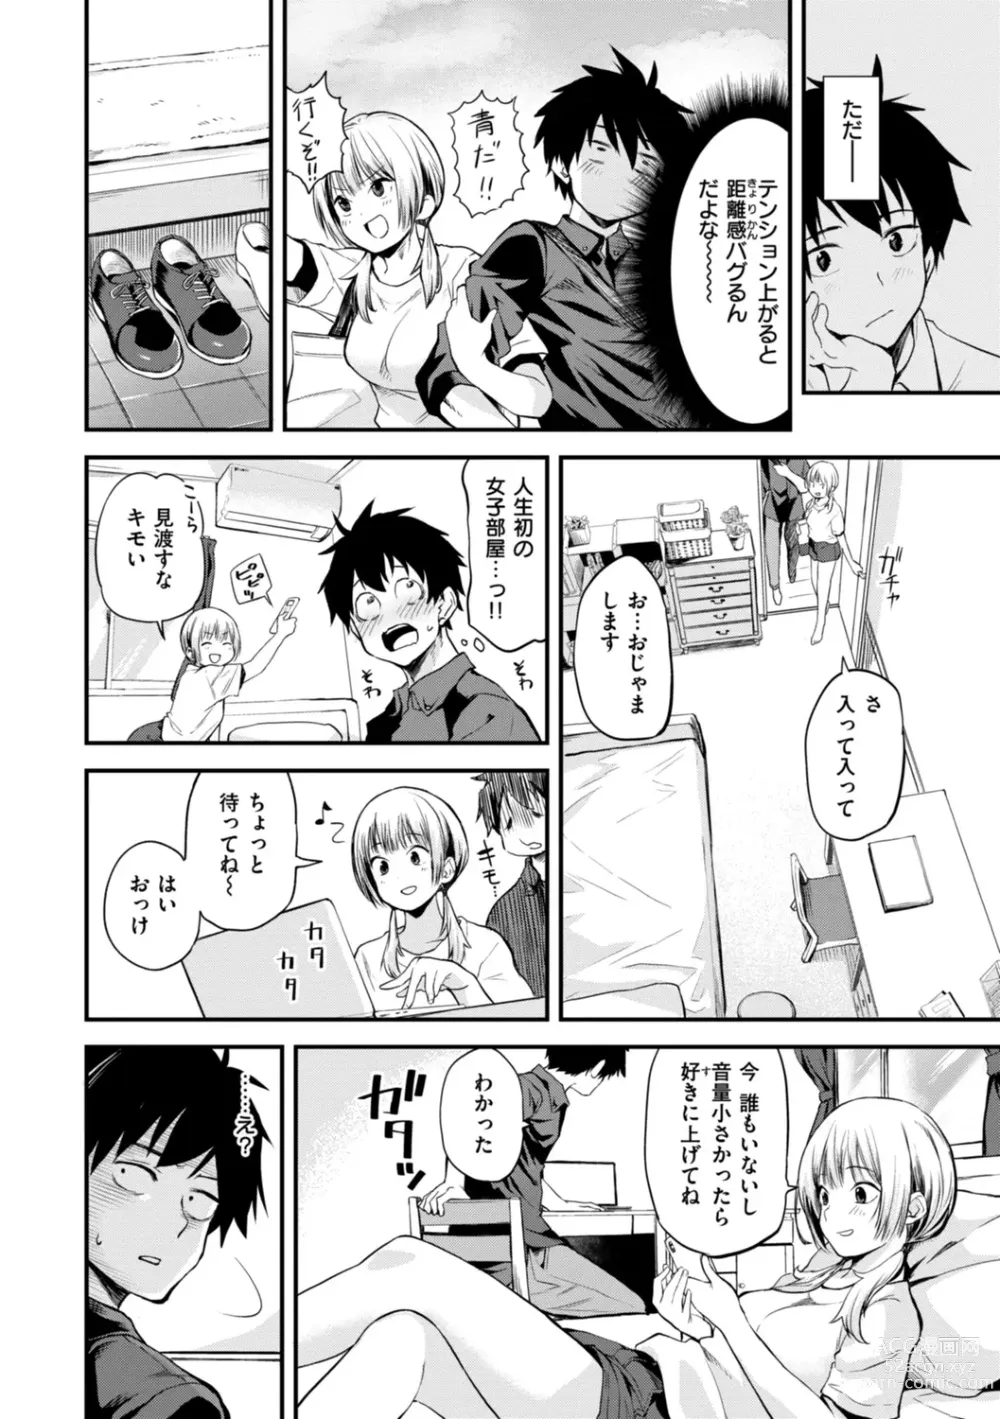 Page 6 of manga Jaa, Ecchi Shichau? - Shall we have H then?